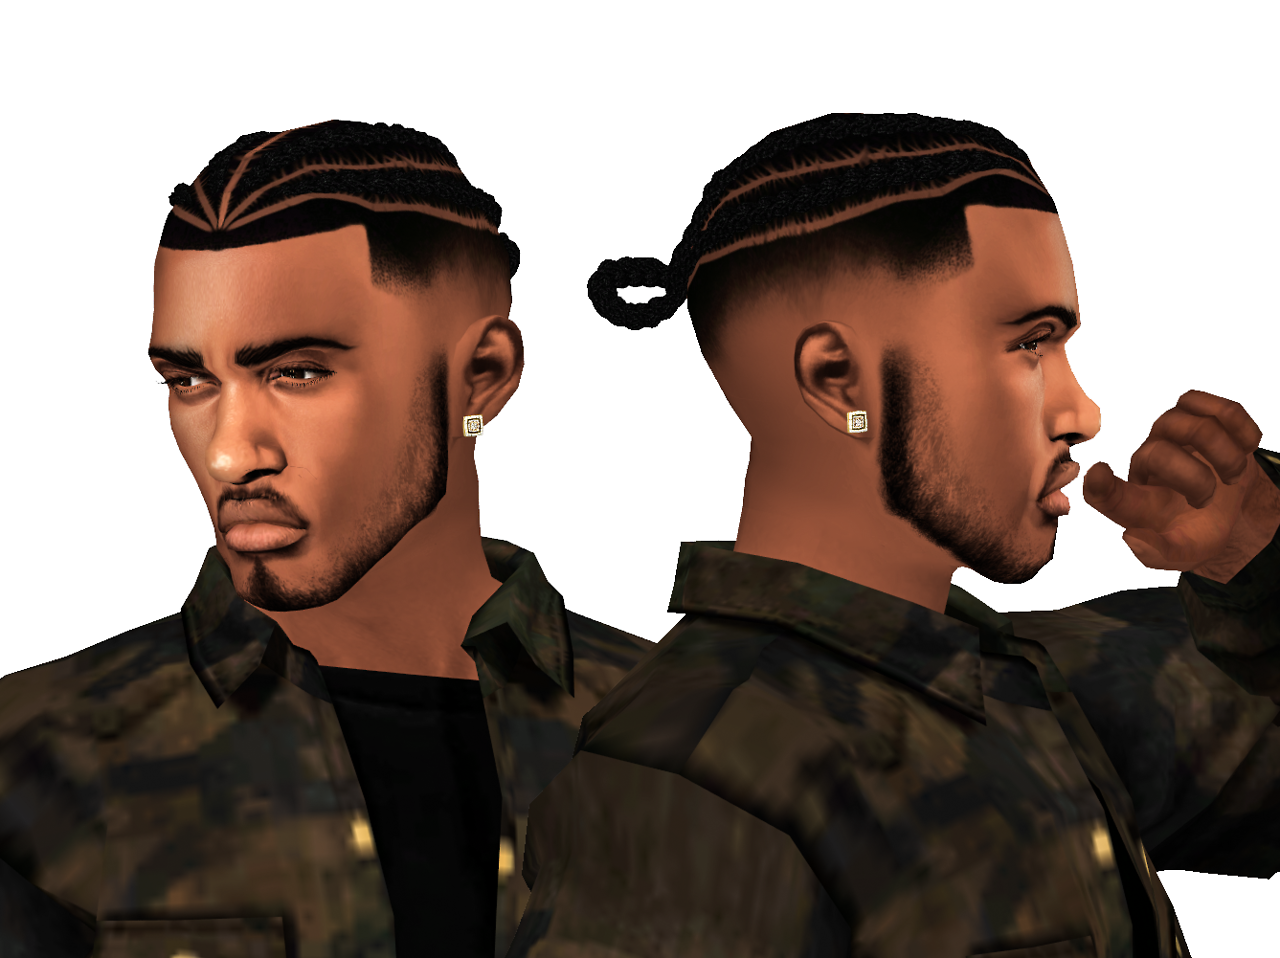 Sims 4 male braids - duckrot